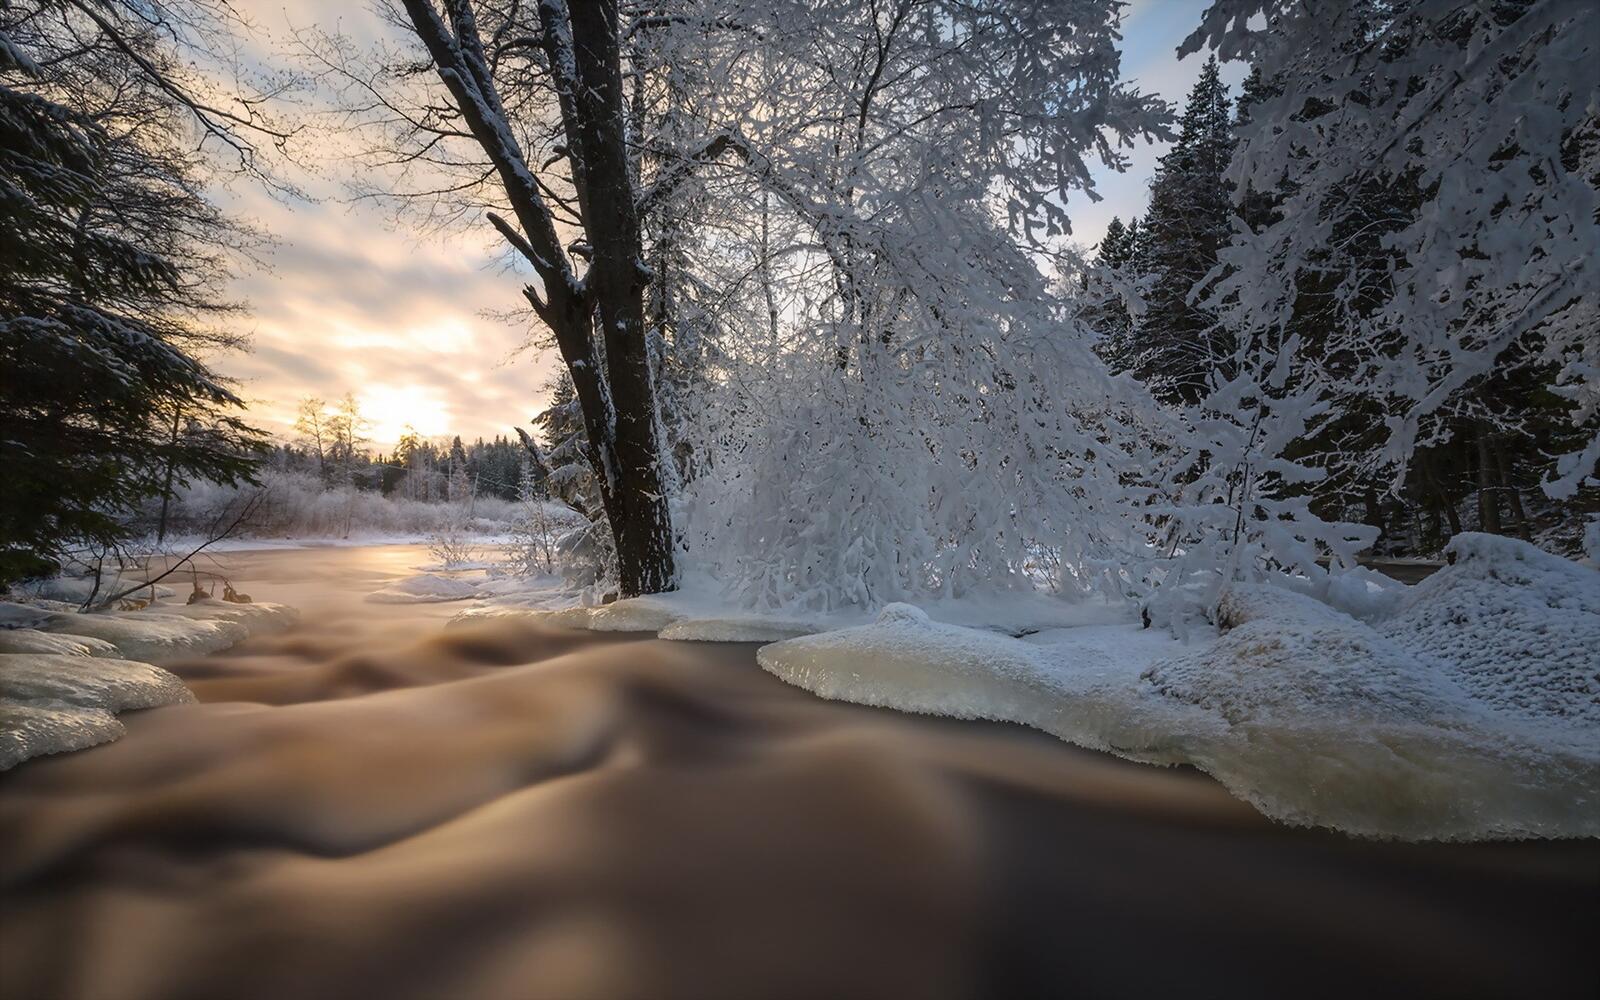 Бесплатное фото Течение реки со снежными берегами